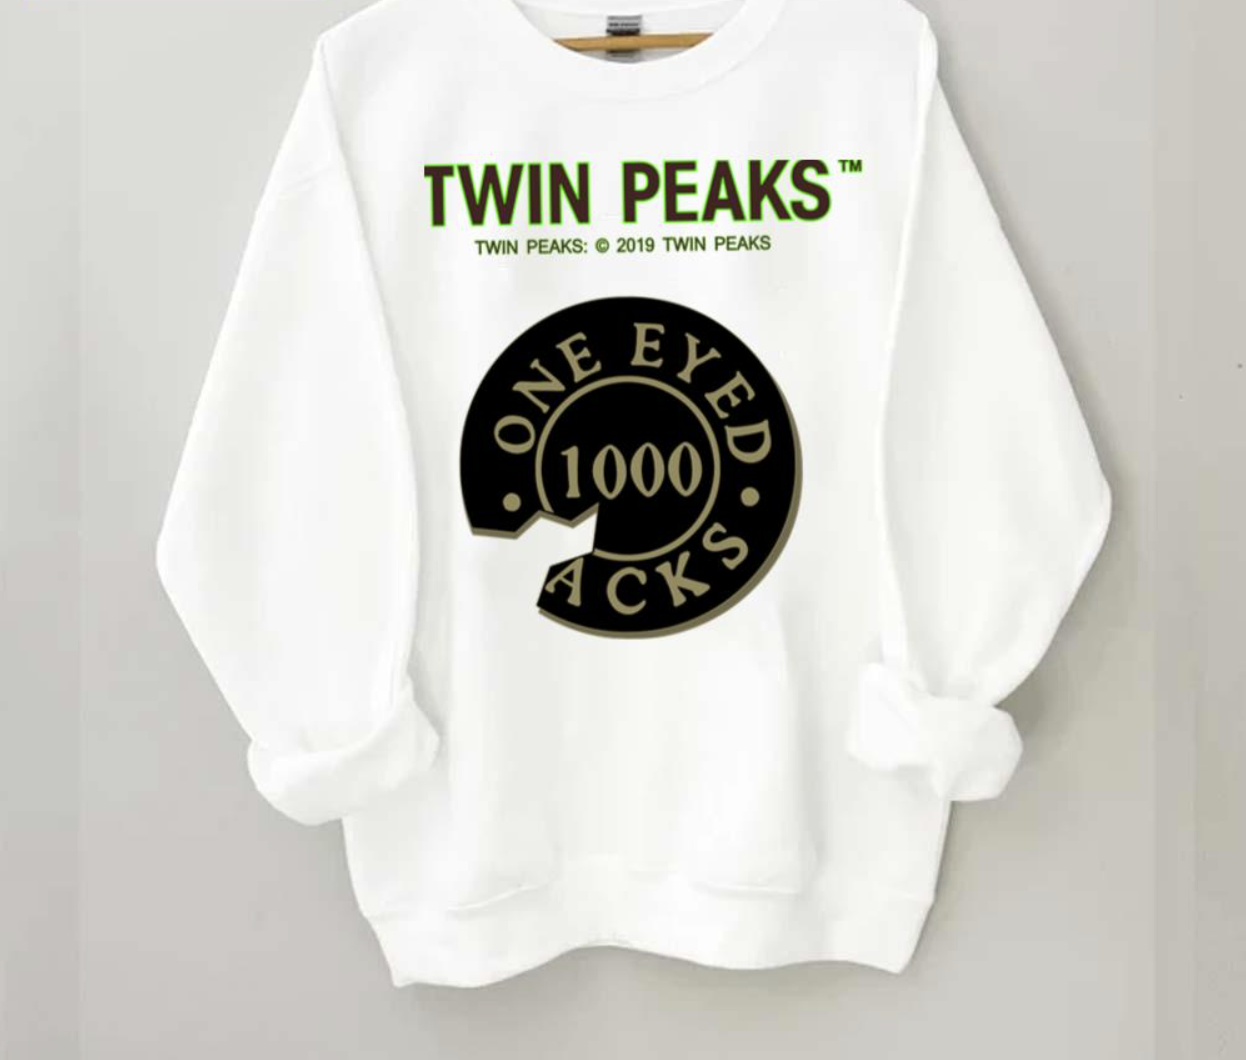 One Eyed Jacks Poker Chip Twin Peaks shirt